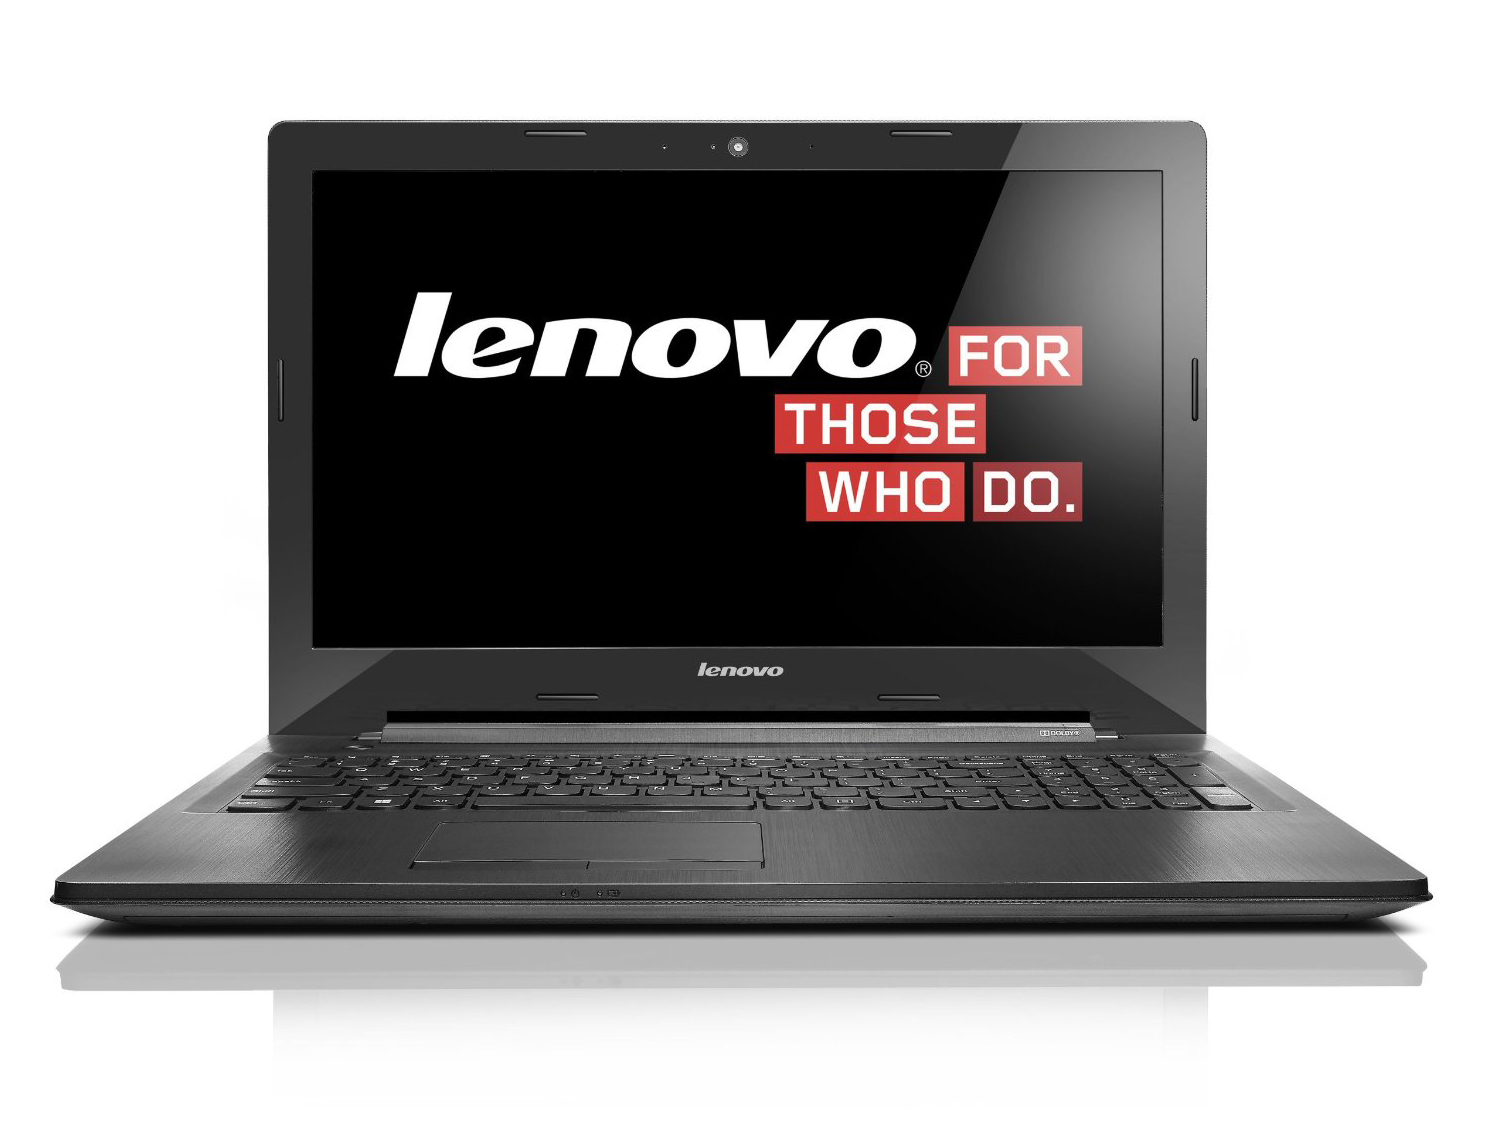 Lenovo G50-30 Notebook Review Update - NotebookCheck.net Reviews